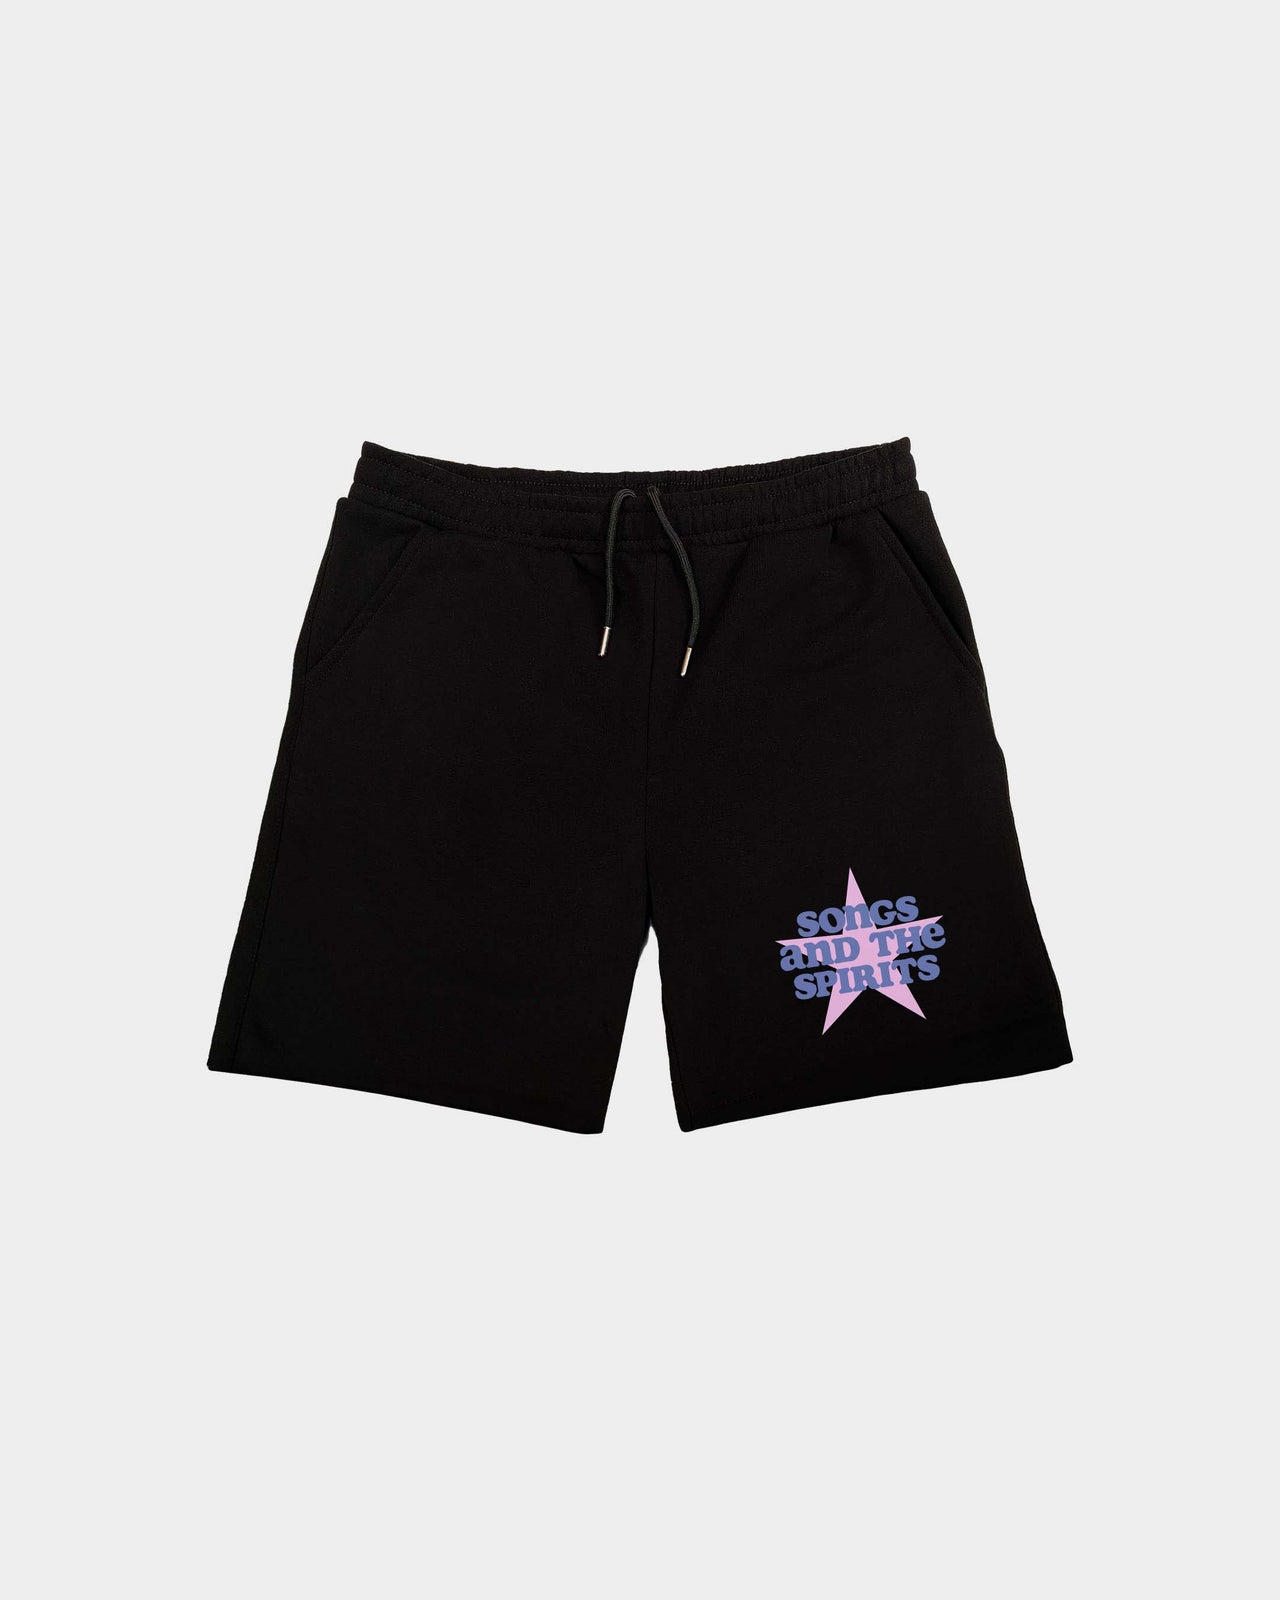 Simply Branded Star Men's Shorts